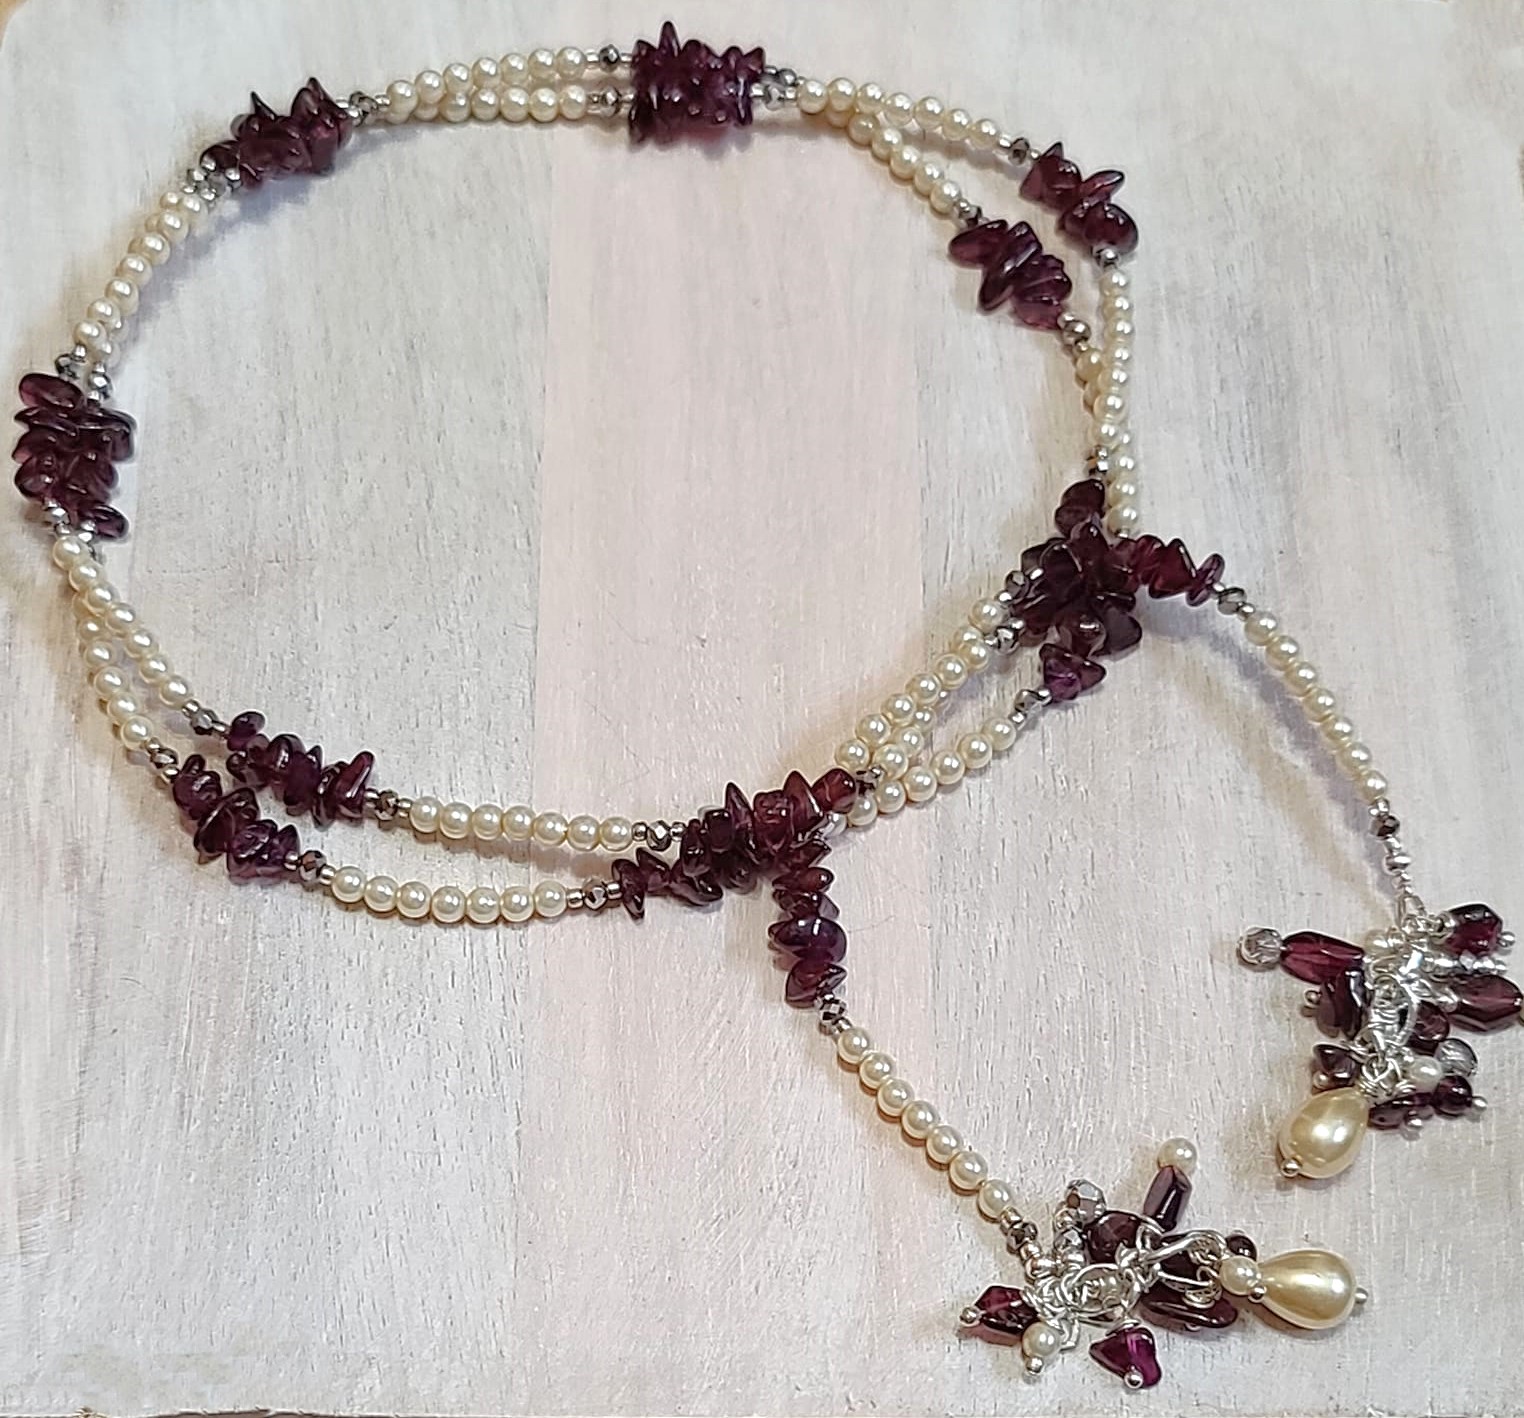 Garnet lariat necklace, garnets and pearls with fringe handcraft